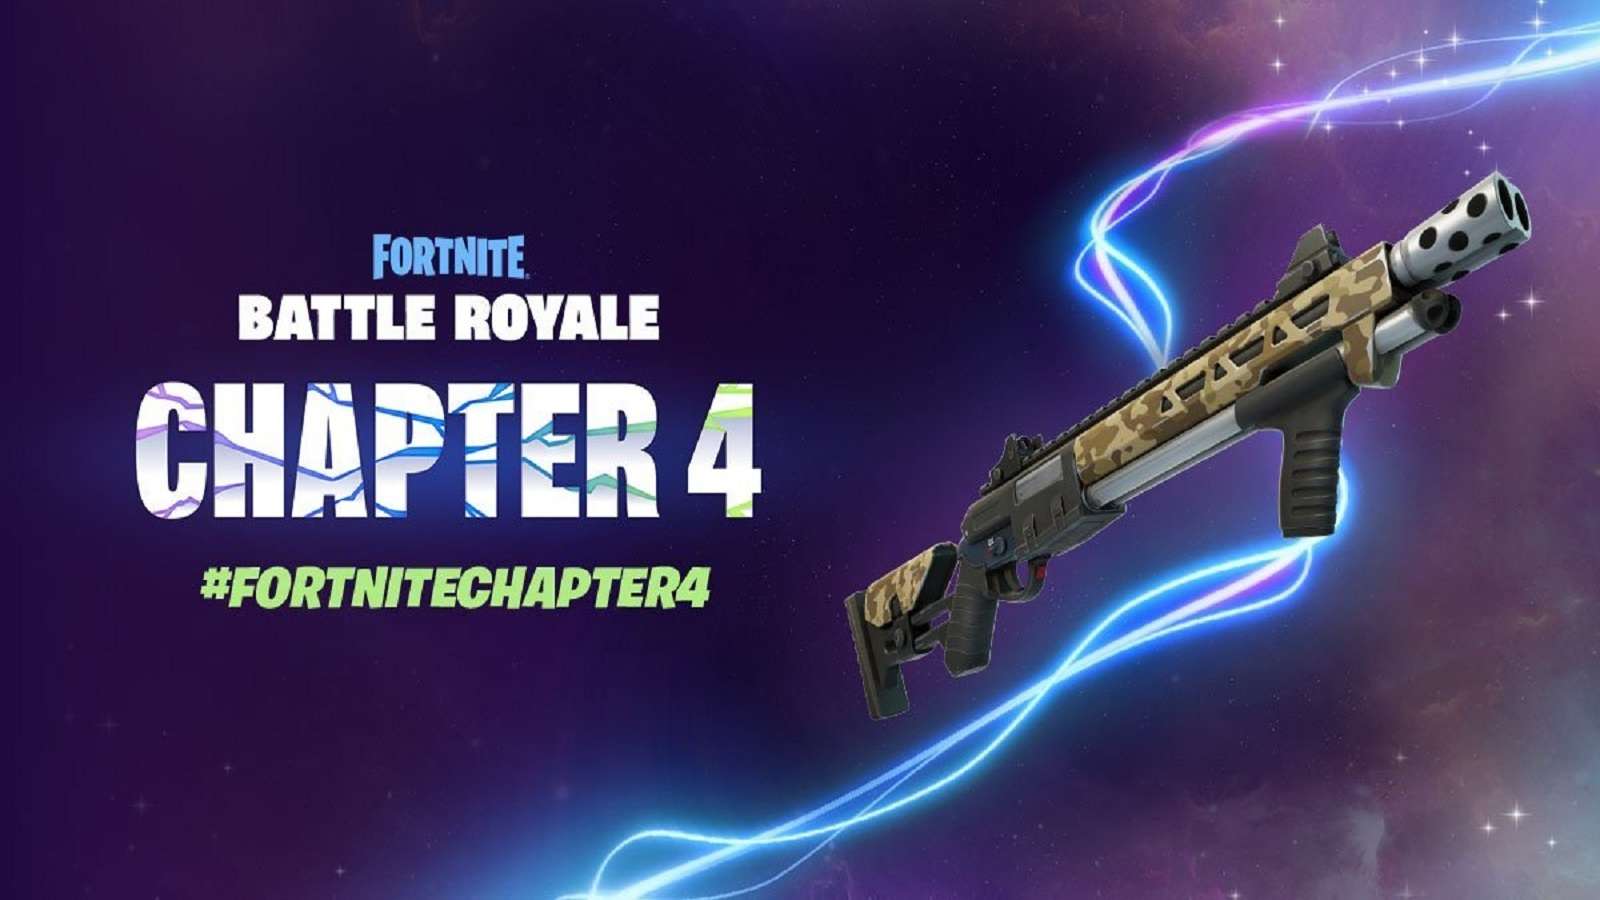 cover art featuring the new thunder shotgun in fortnite chapter 4 season 1